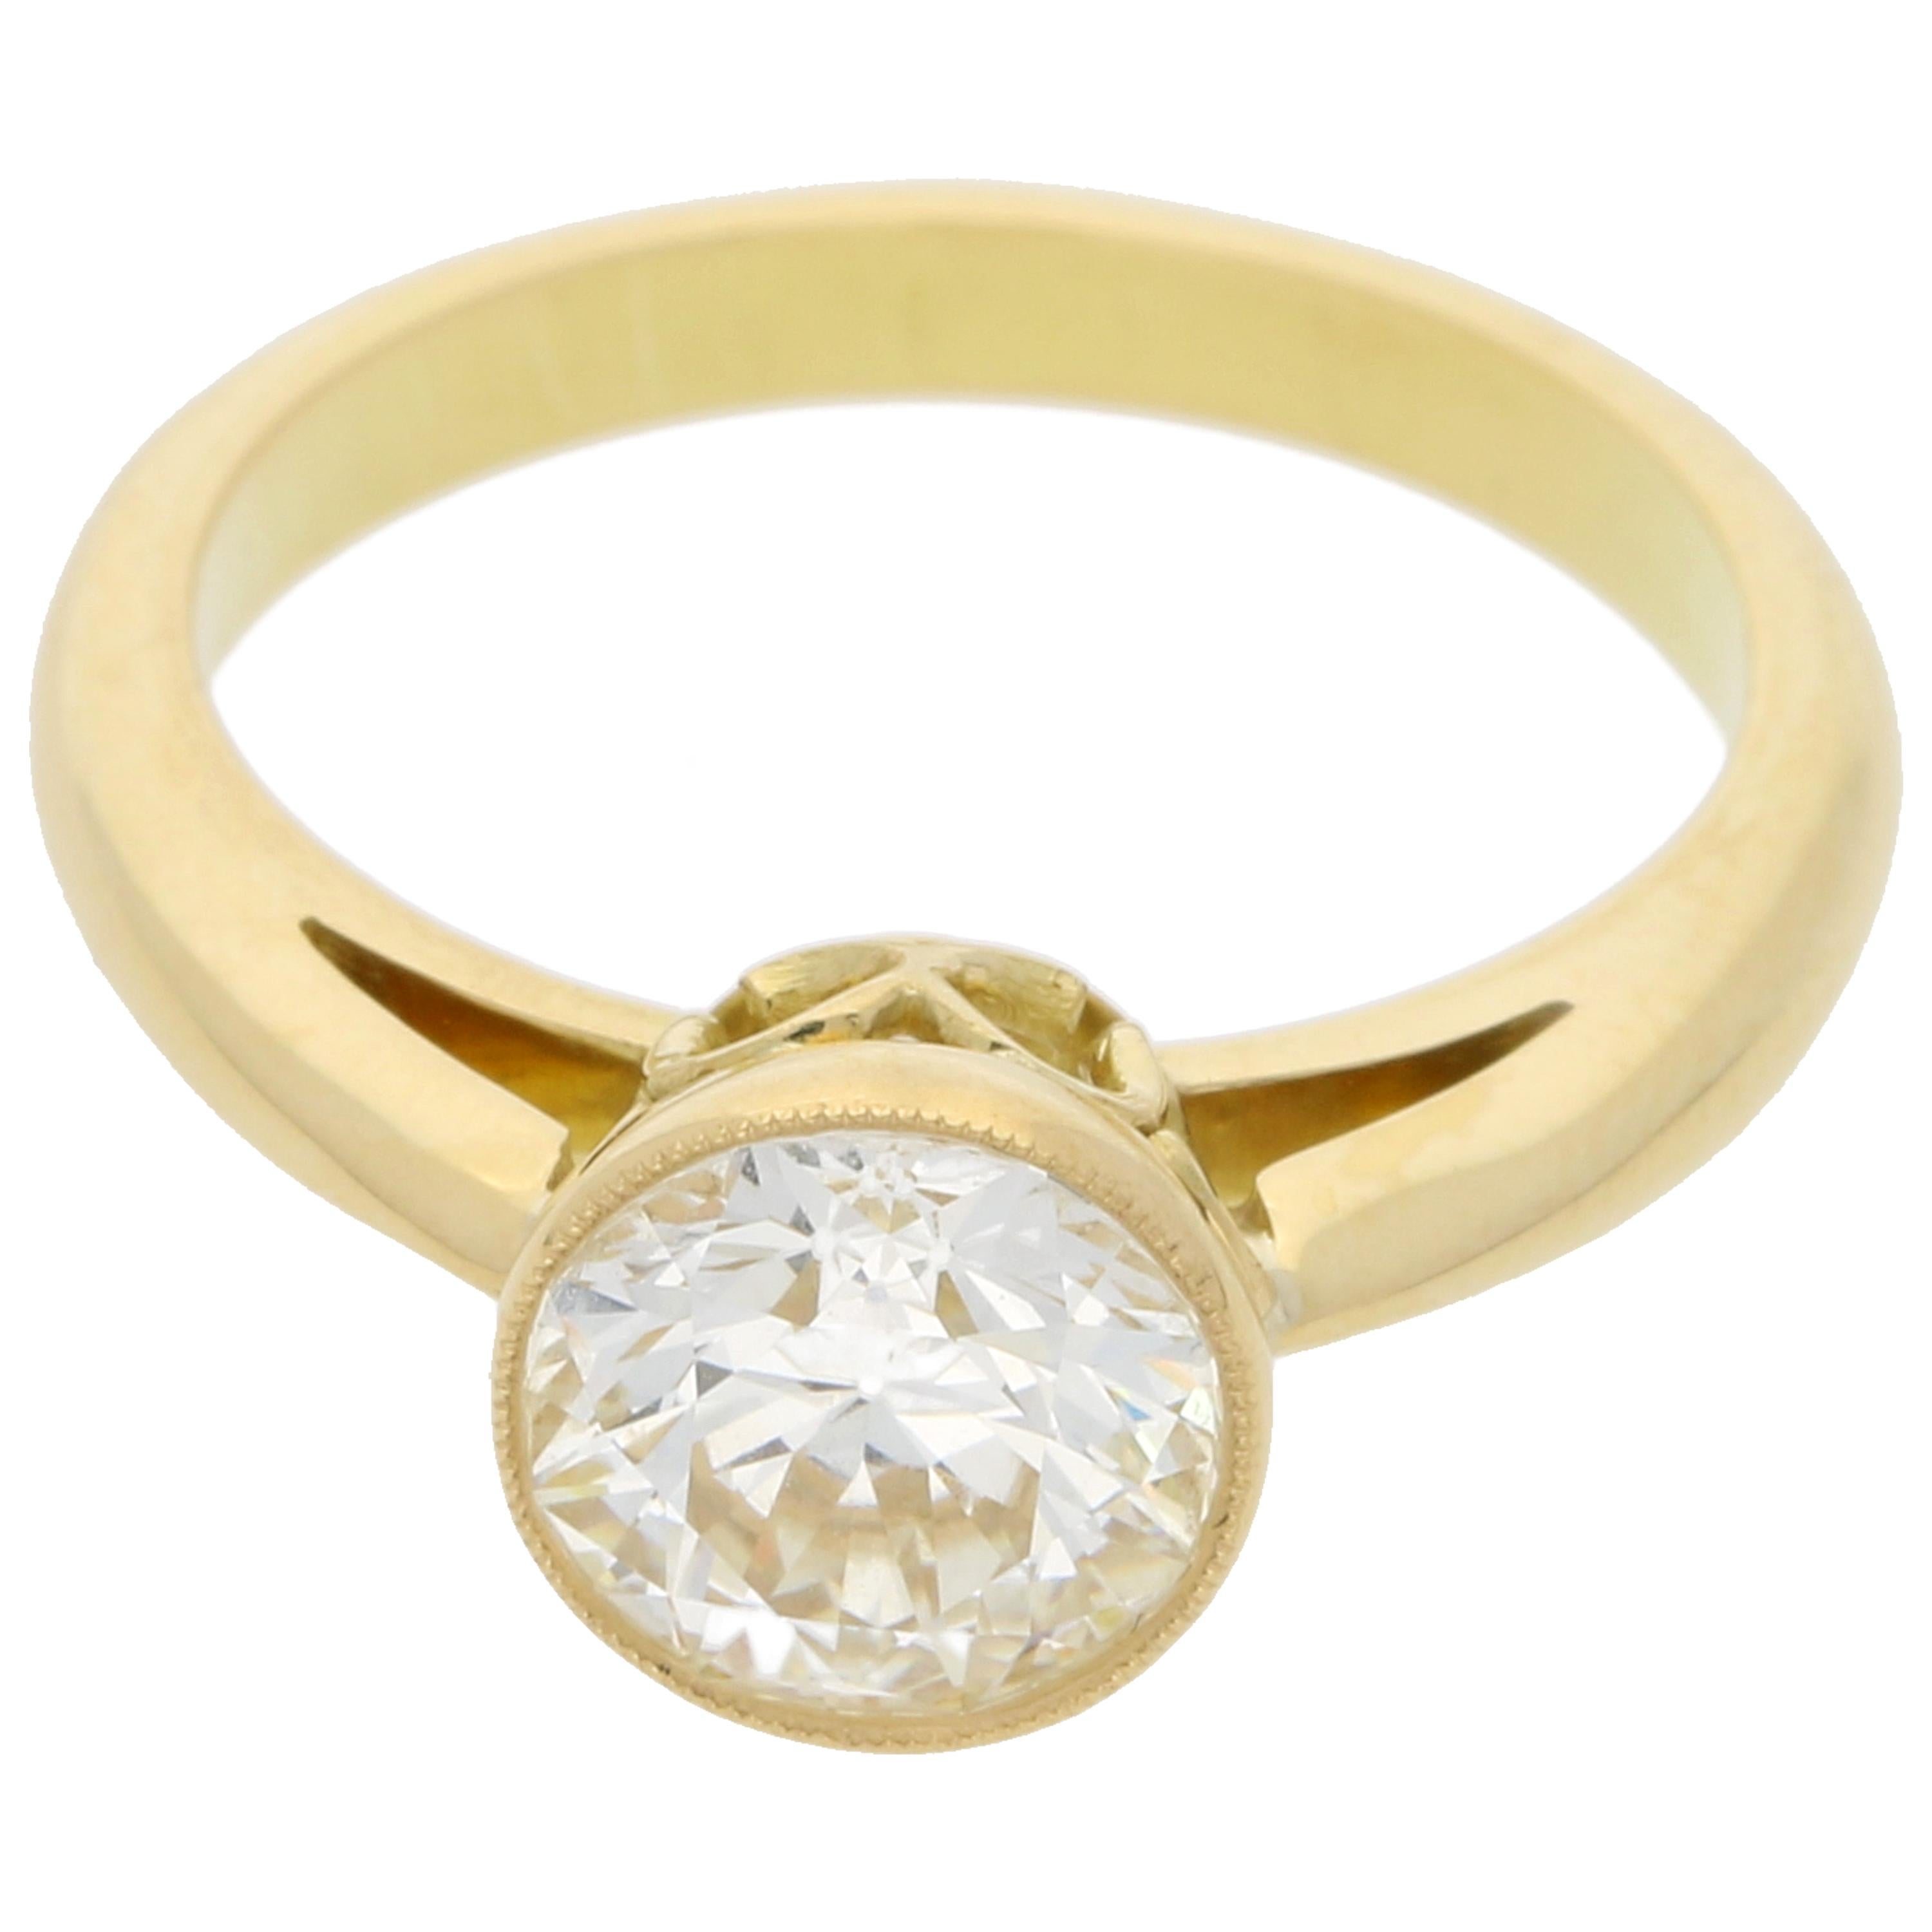 Old Cut Diamond Engagement Ring in 18 Karat Yellow Gold